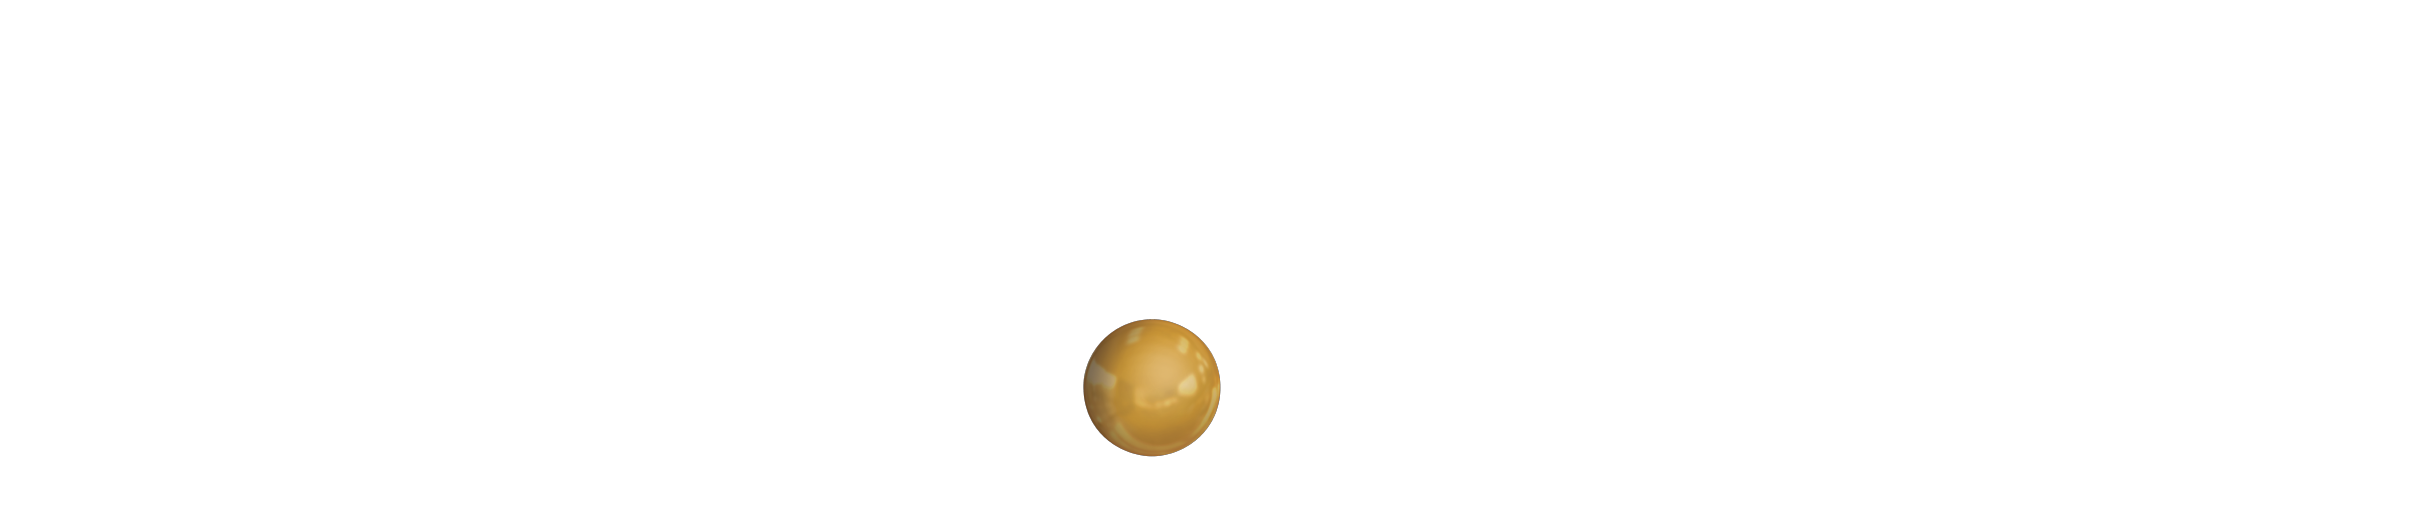 Marble Room Logo transparent